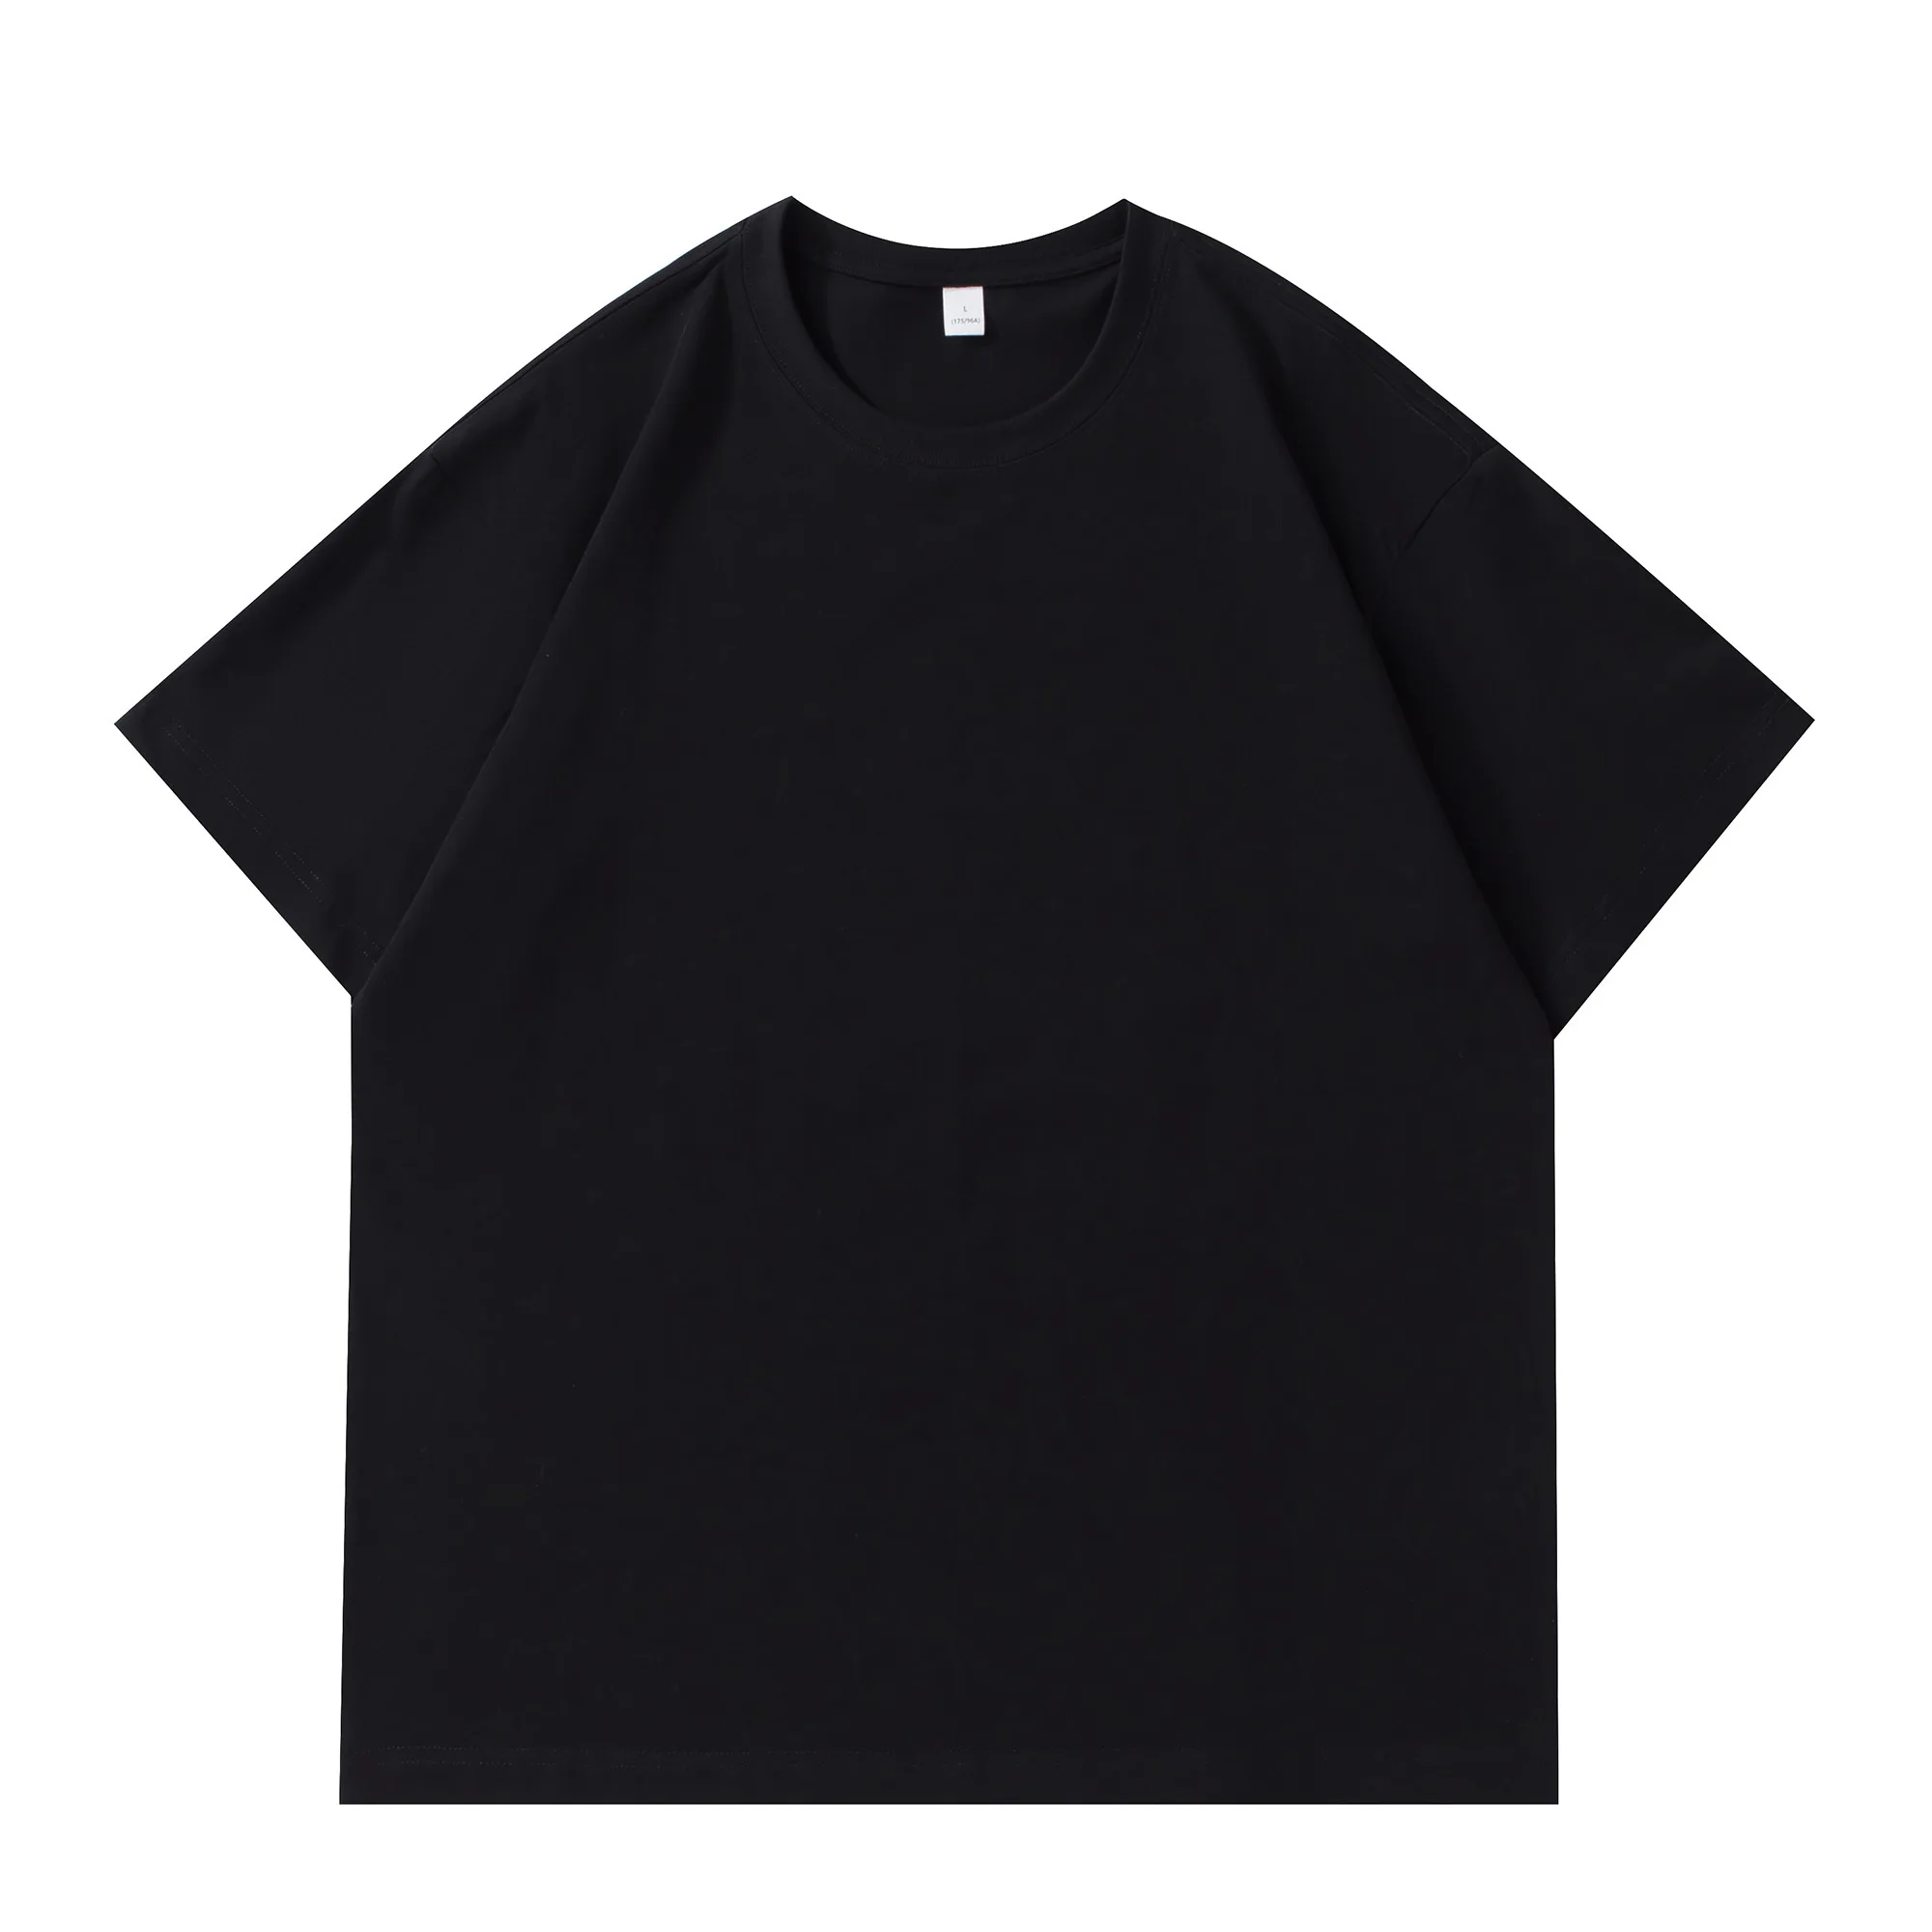 New Elasticity Man 100 Cotton T Shirt Oversized Crewneck Sweatshirt ...